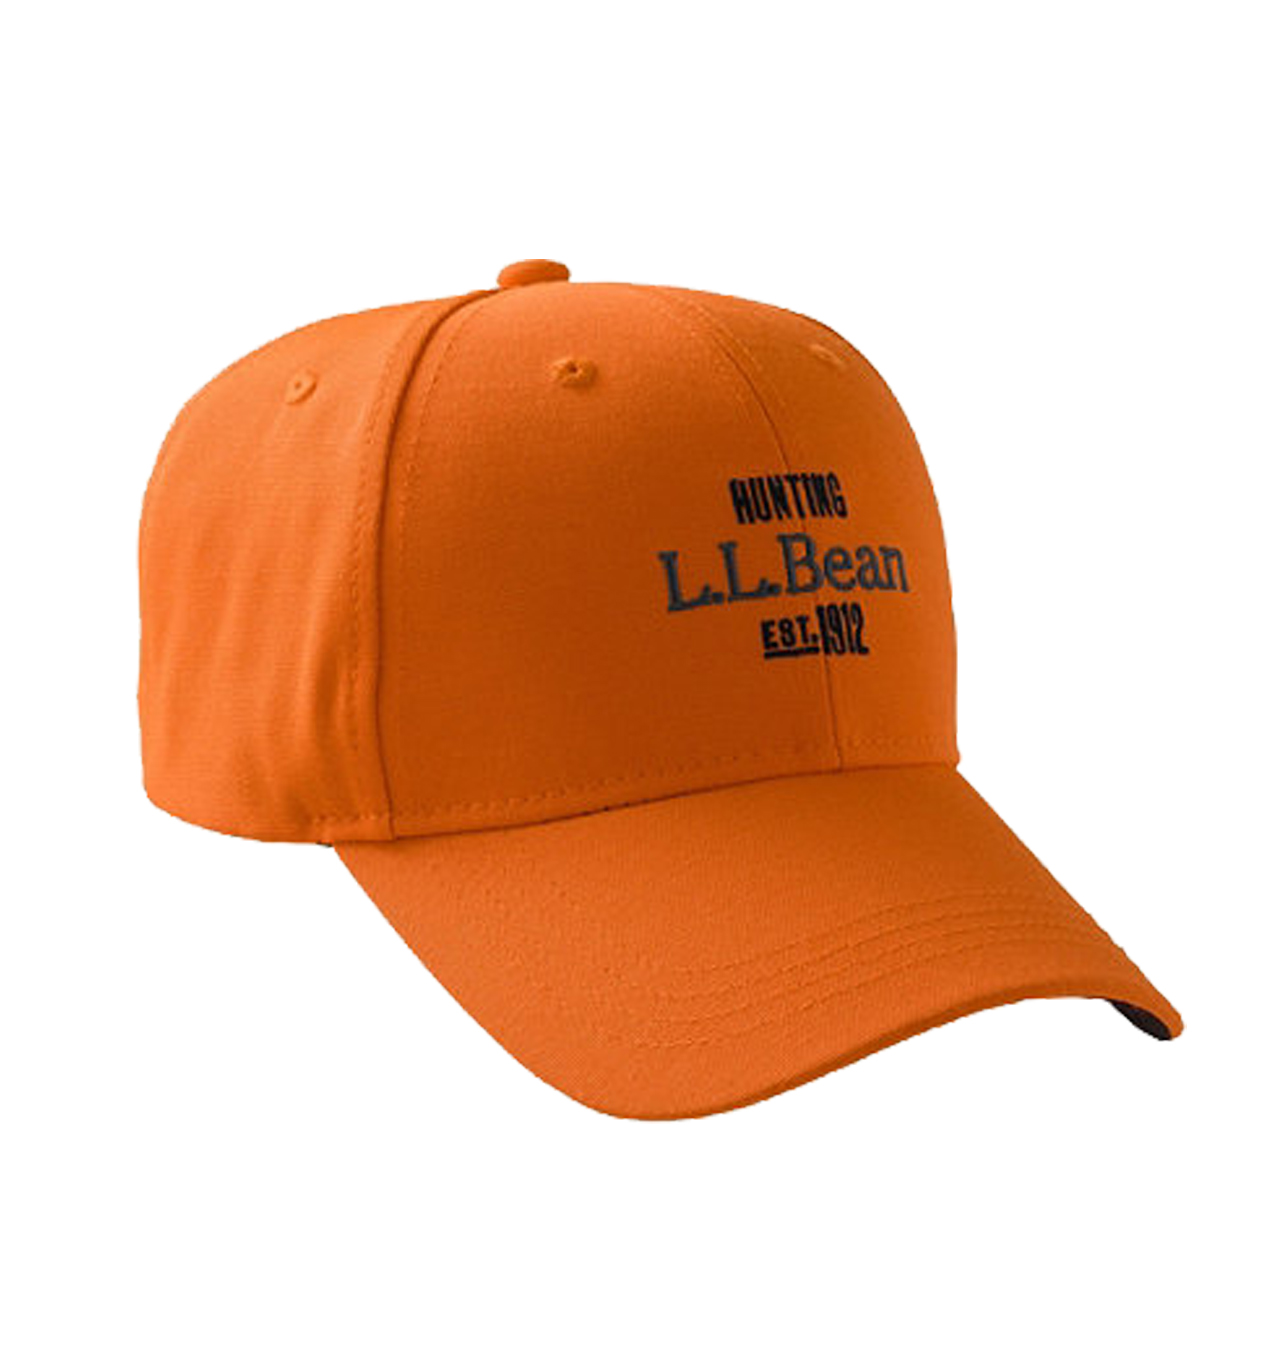 L.L. Bean - Heritage Hunting Hat - Hunter Orange